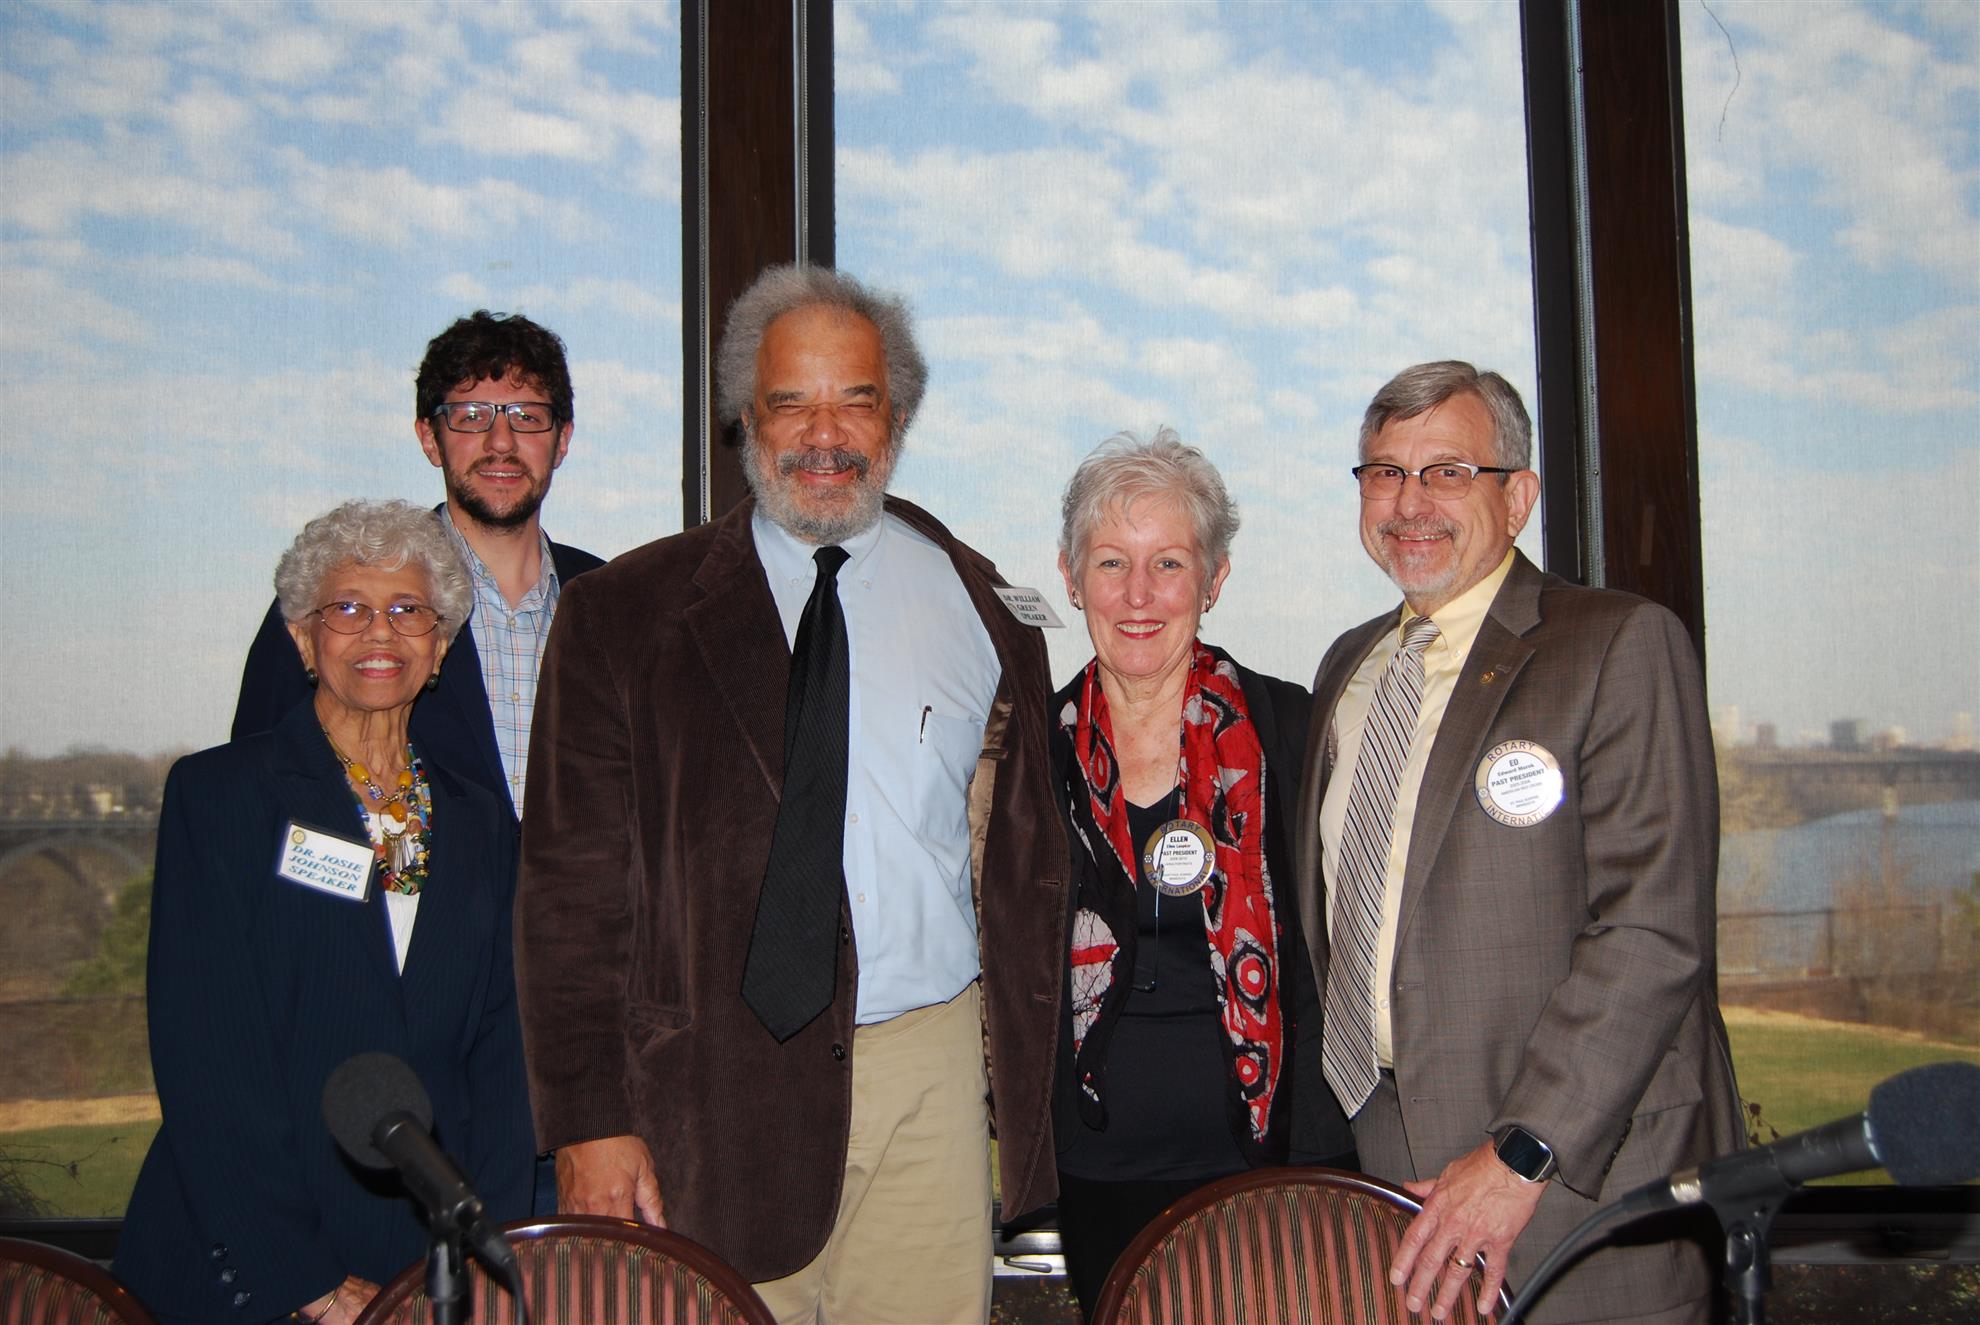 Pictured from left are Josie Johnson, panelist, Tom Moe, moderator, Dr. Bill Green, panelist, Ellen Luepker, Forum co-chair, and Ed Marek, Forum co-chair